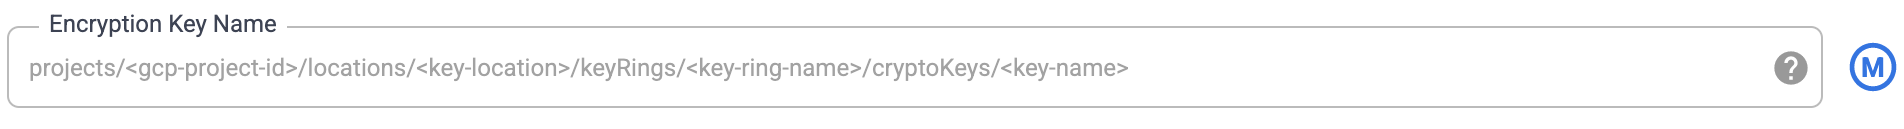 Nomes das chaves de criptografia